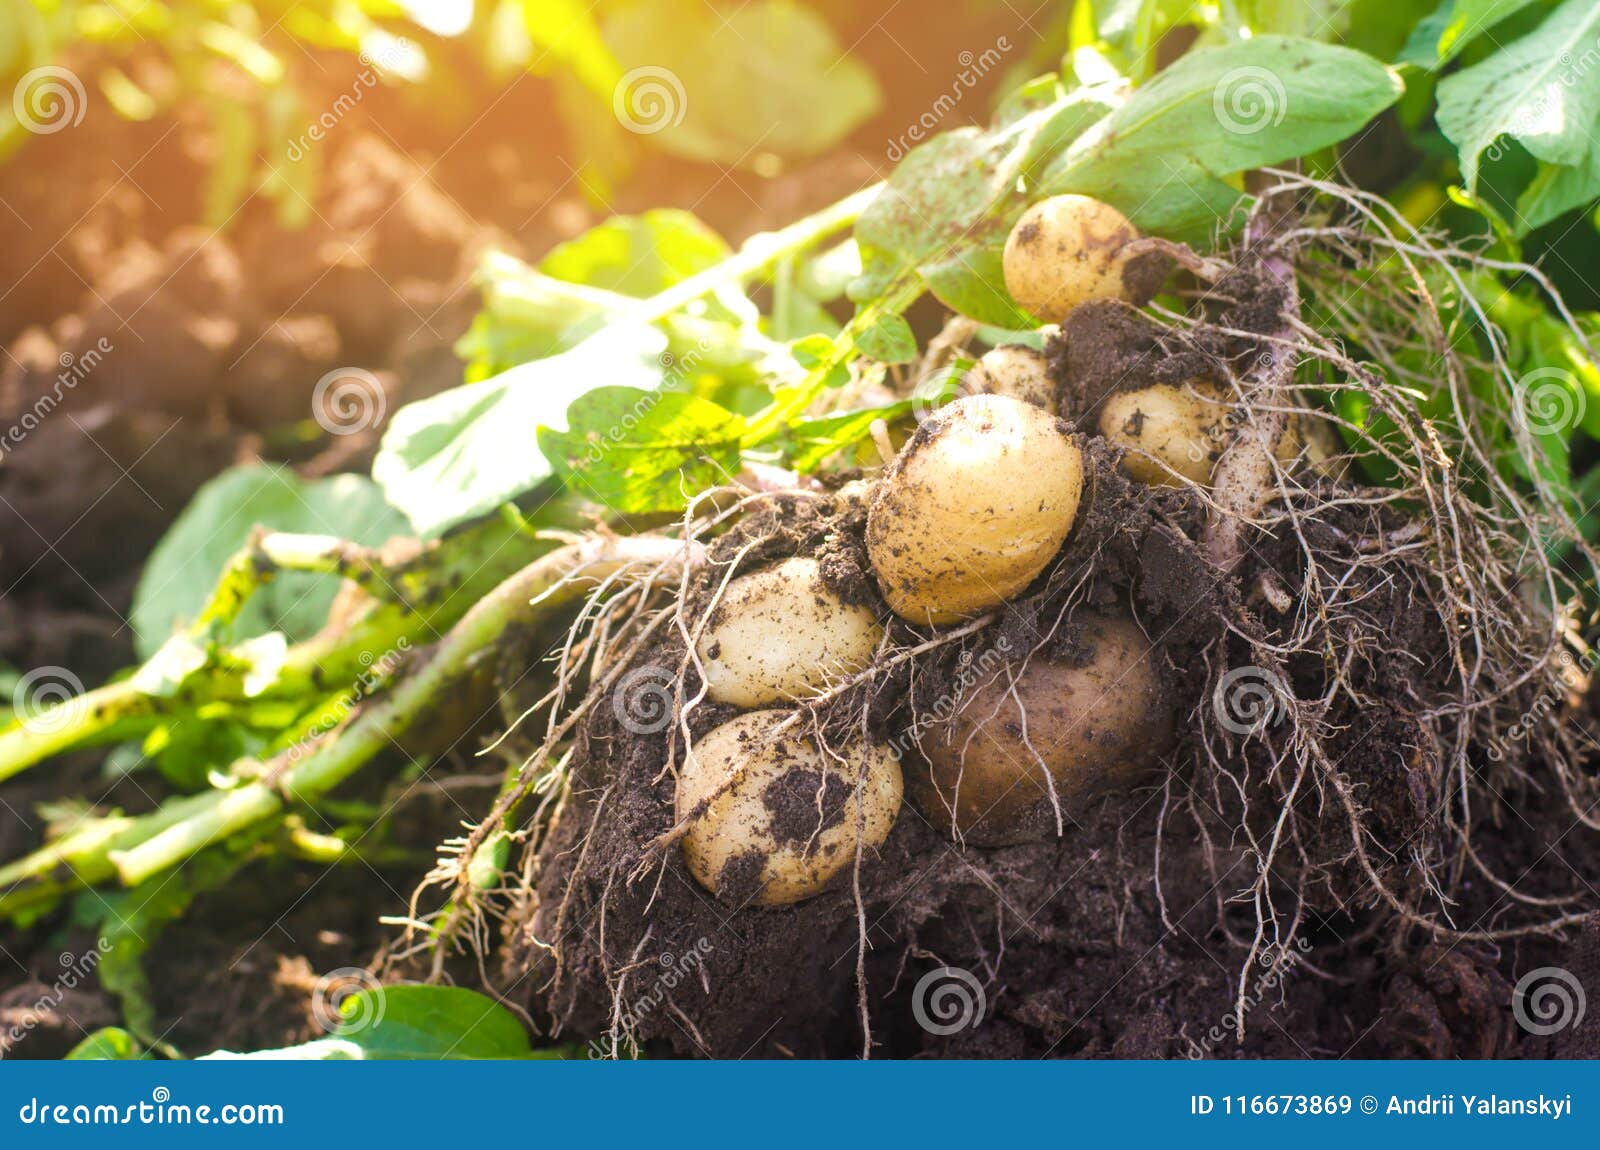 a bush of young yellow potatoes, harvesting, fresh vegetables, agro-culture, farming, close-up, good harvest, detox, vegetarian